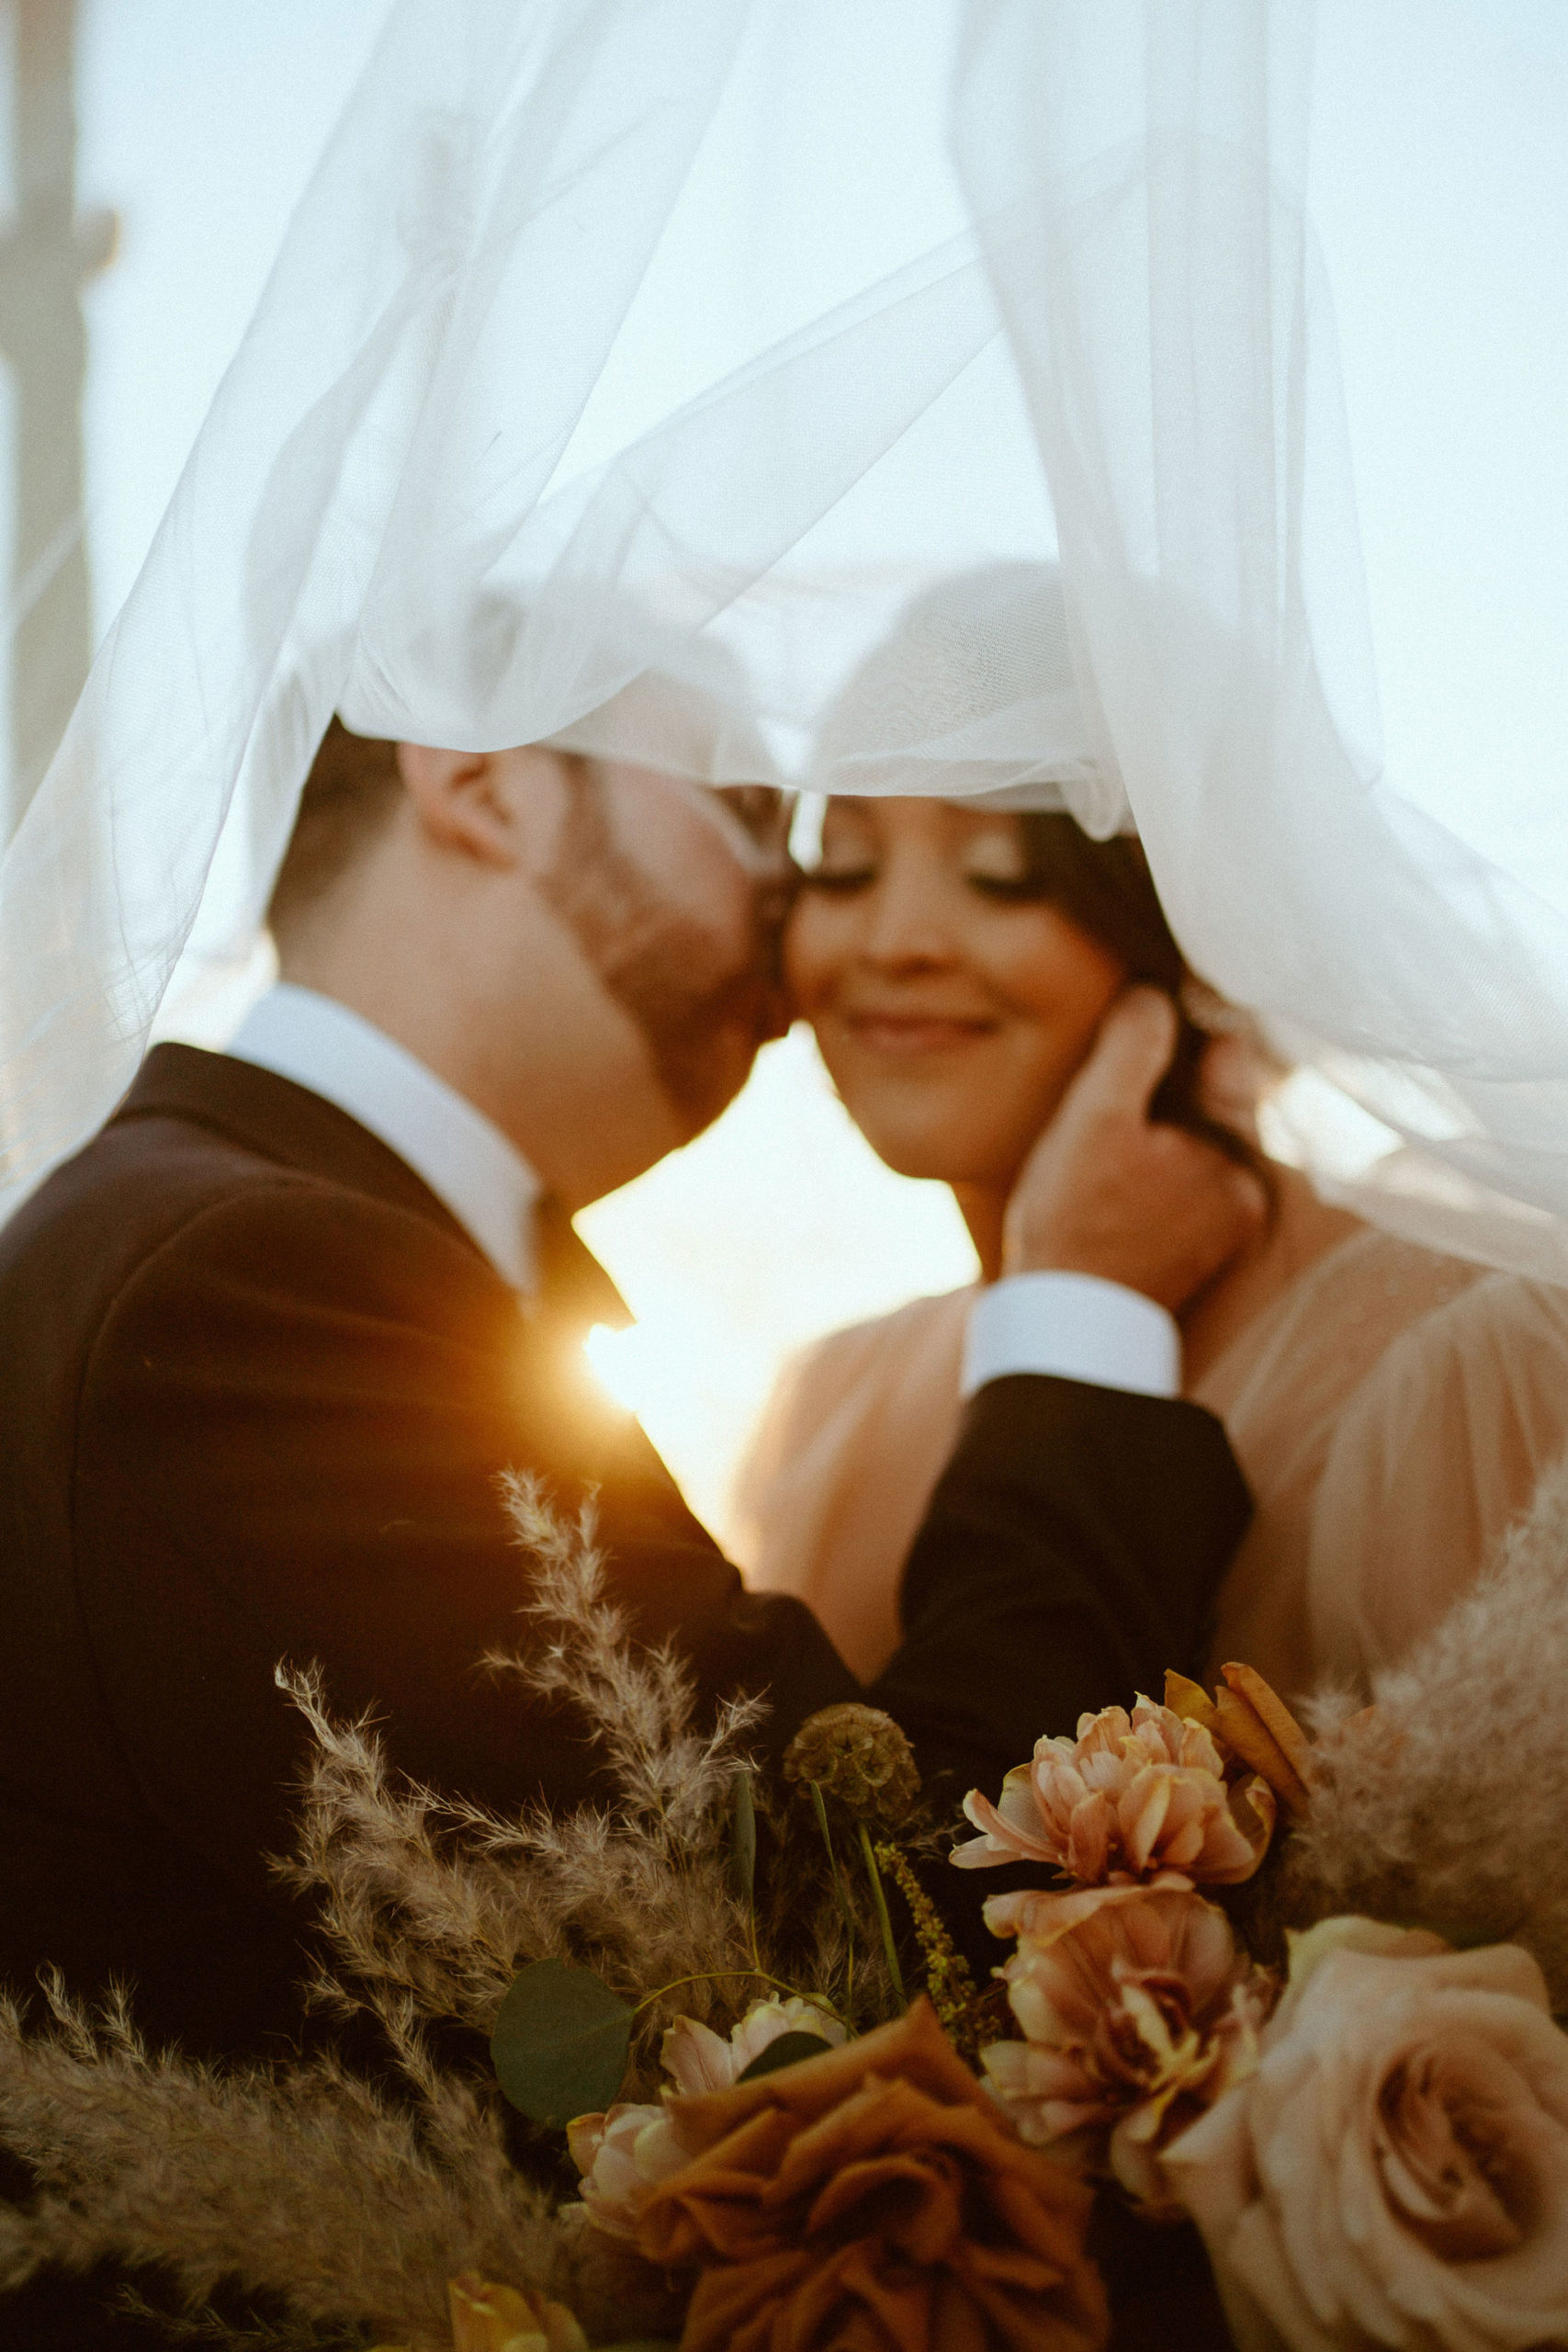 Saguaro National Park Micro-Wedding. The groom kissing the brides cheek under her veil